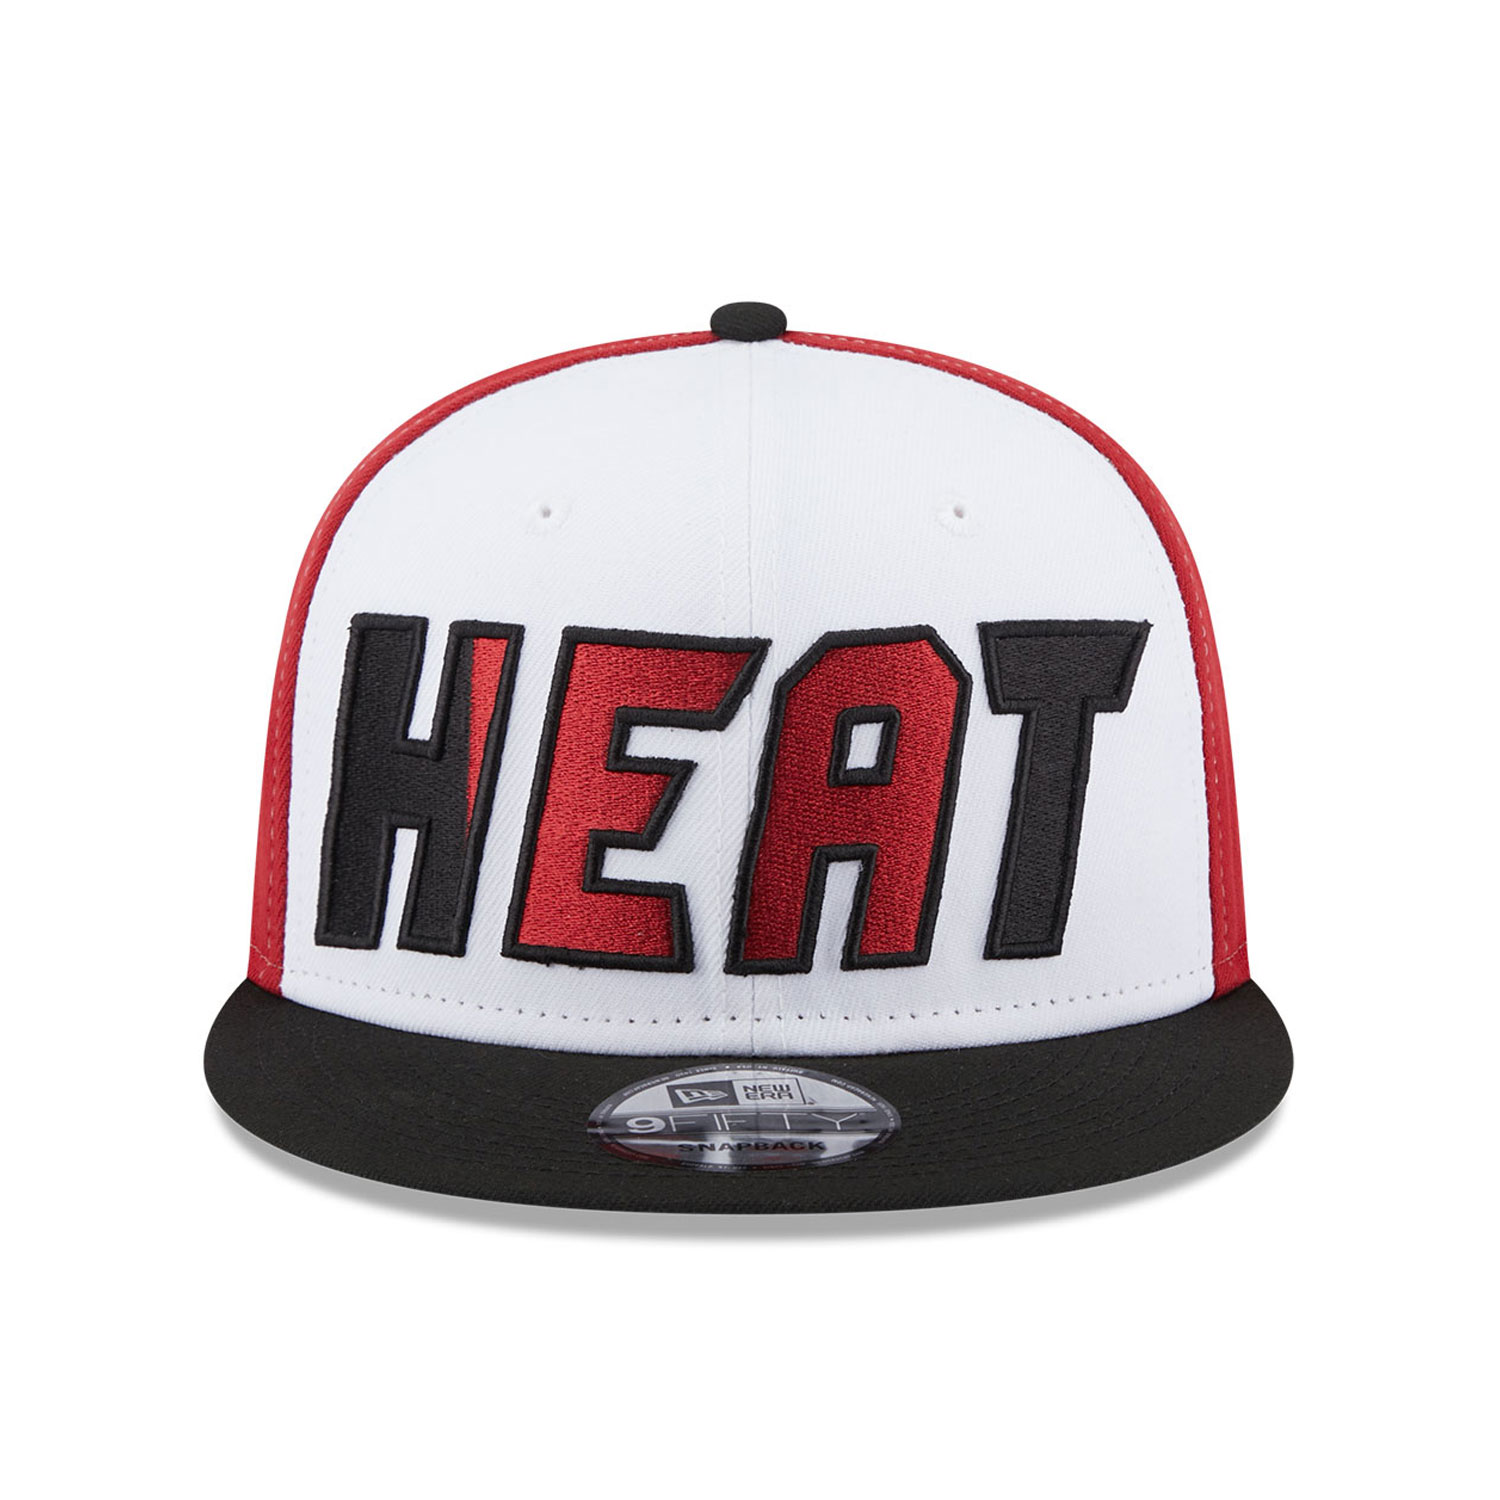 Miami Heat NBA Back Half Black 9FIFTY Snapback Cap